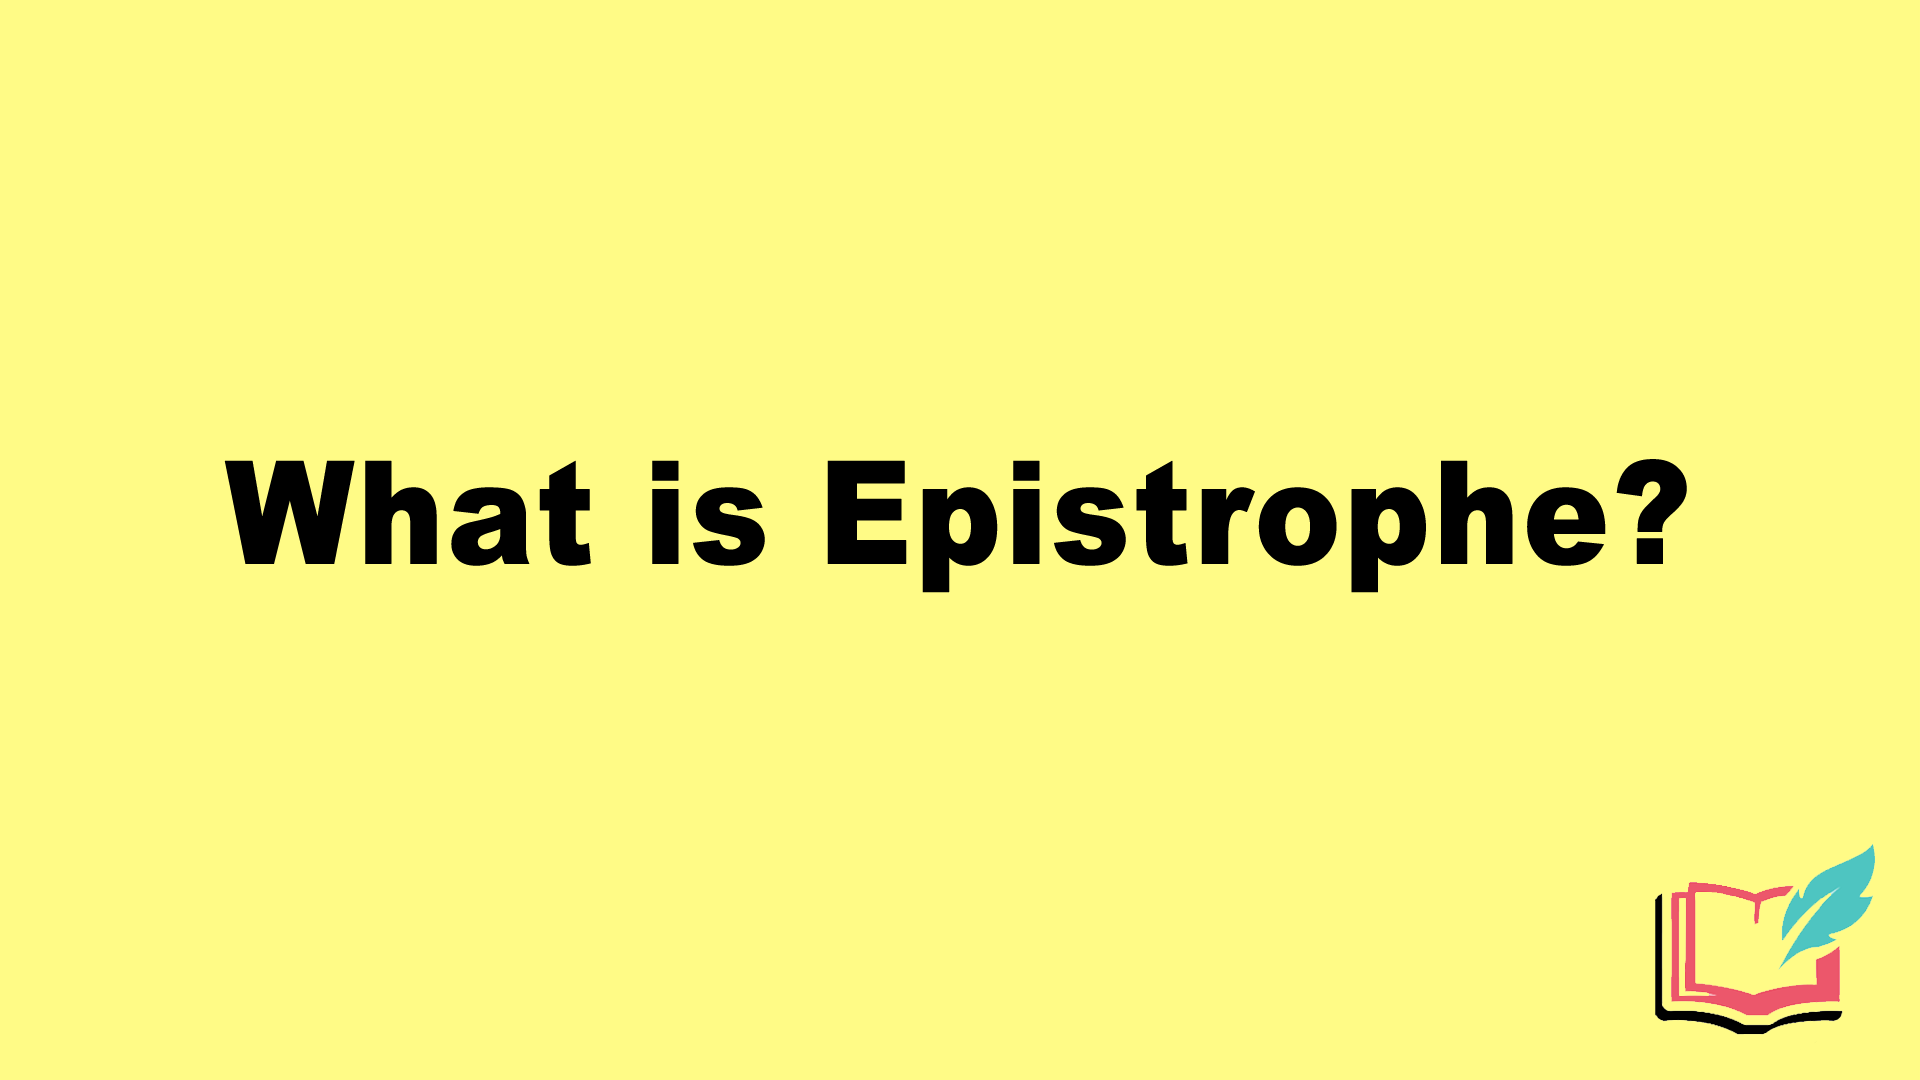 epistrophe as a literary term